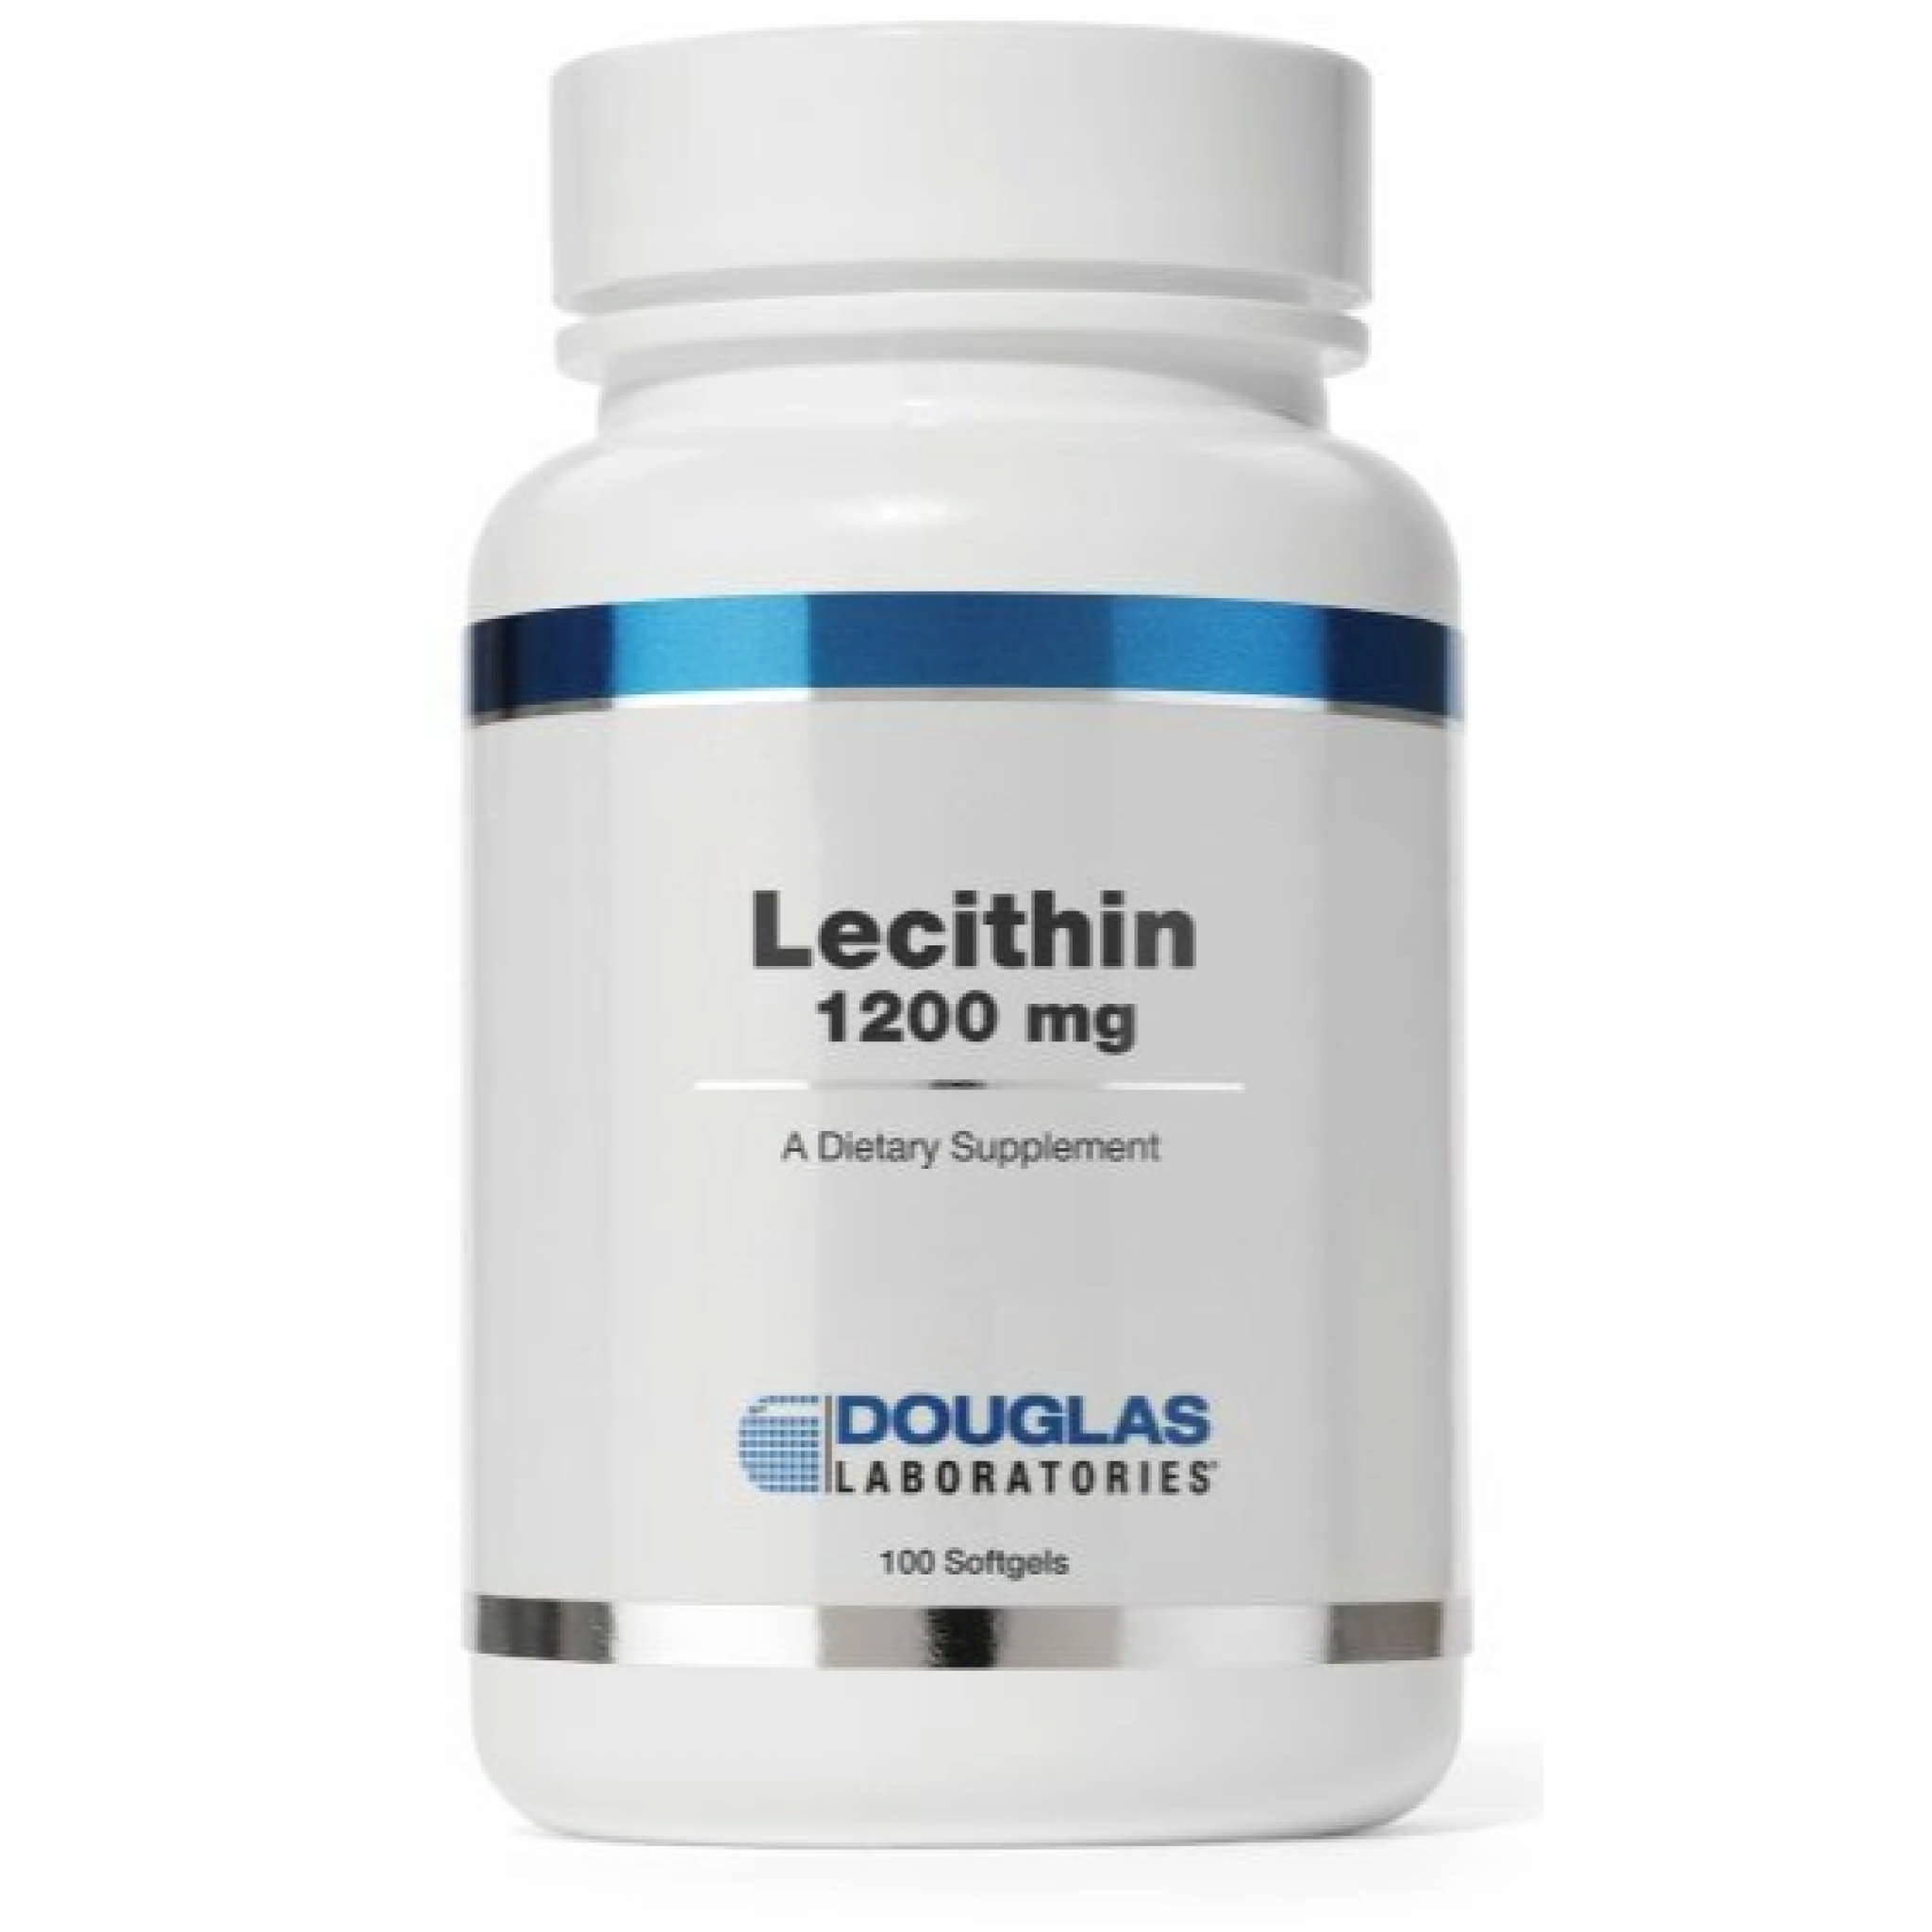 Douglas Laboratories - Lecithin 1200 mg